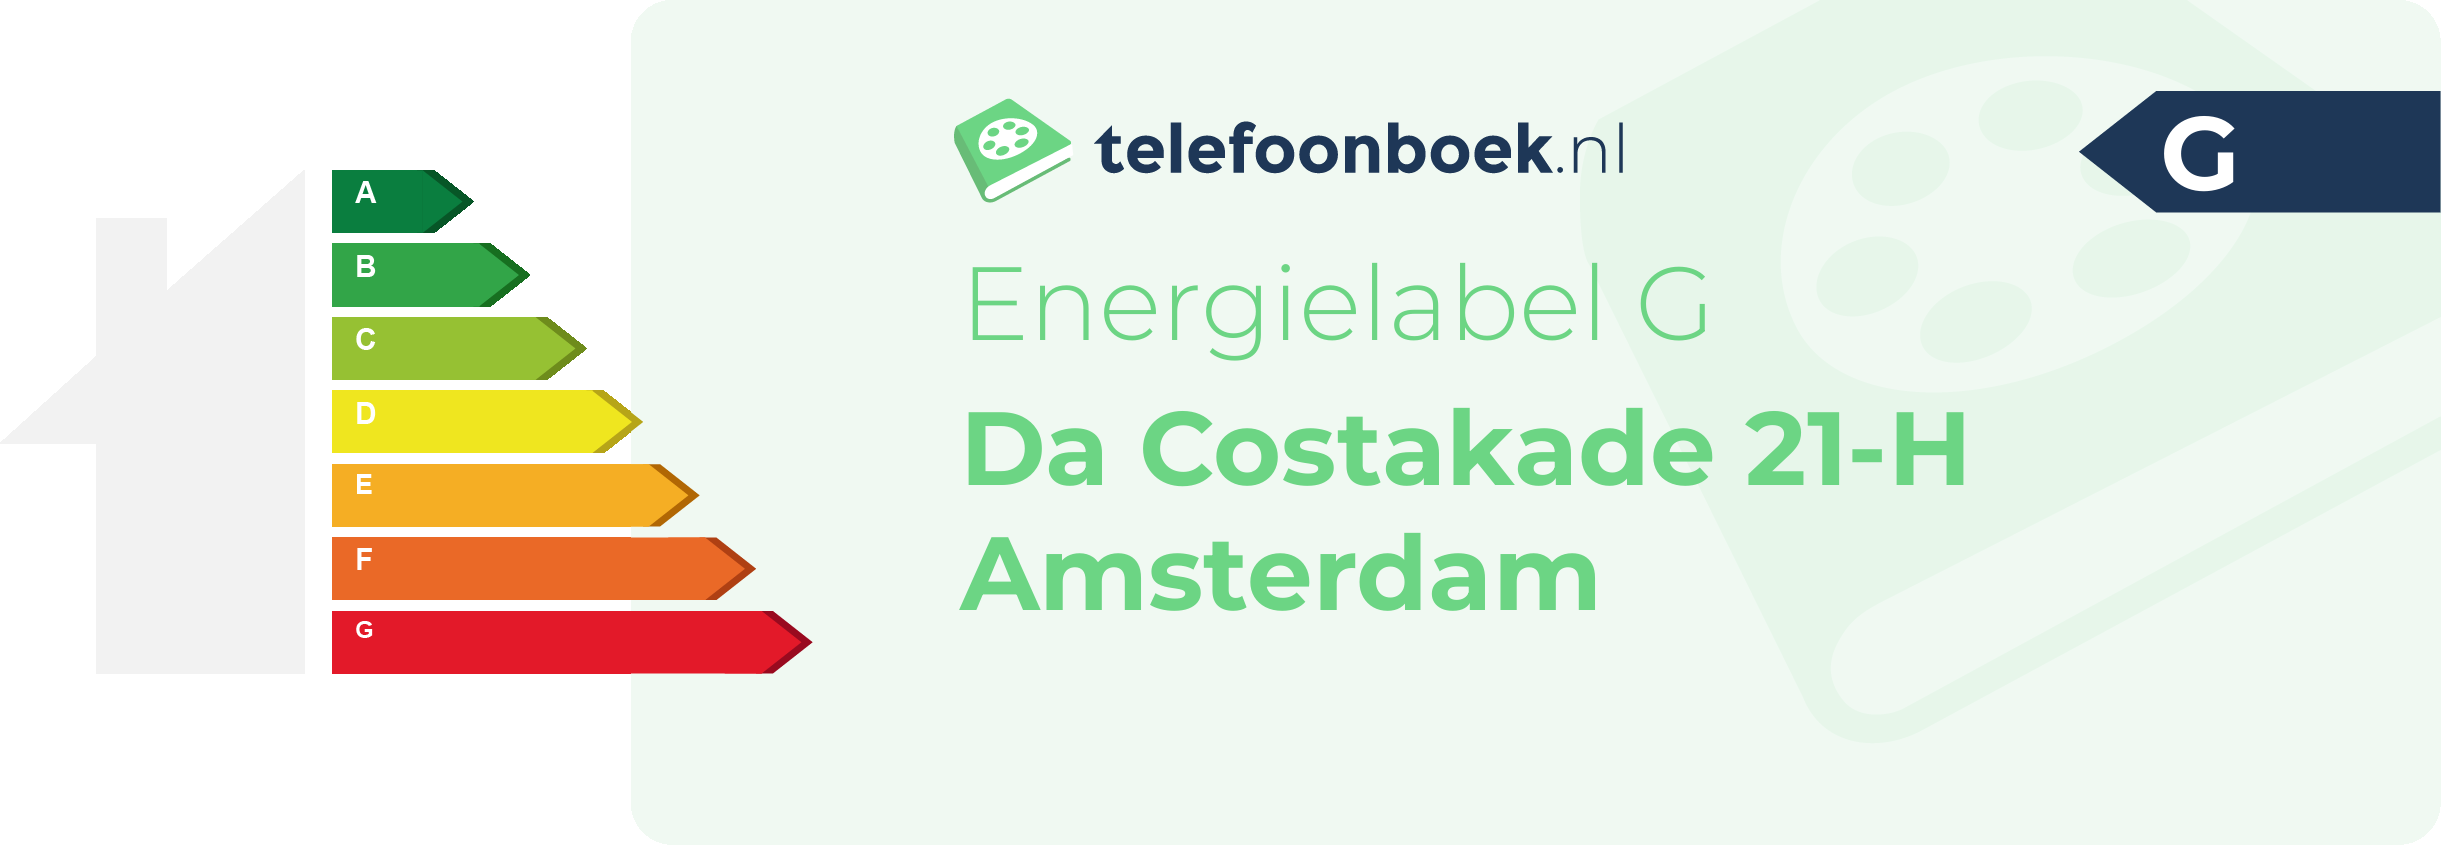 Energielabel Da Costakade 21-H Amsterdam